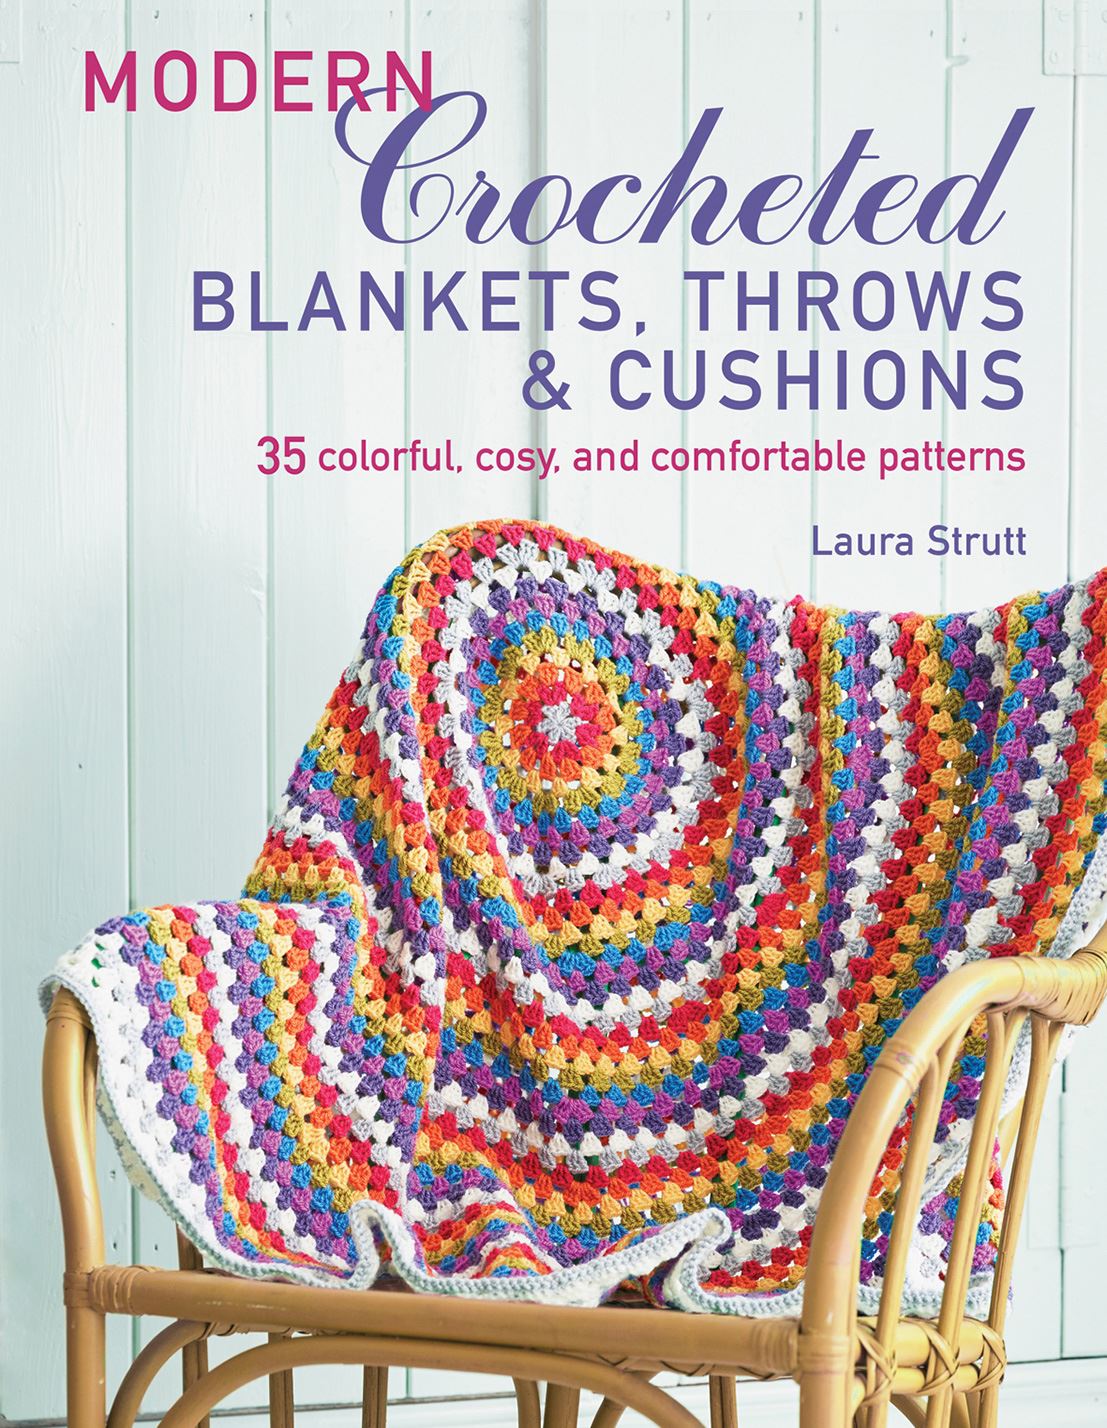 Modern Crocheted Blankets, Throws & Cushions - Pattern Book by Laura Strutt